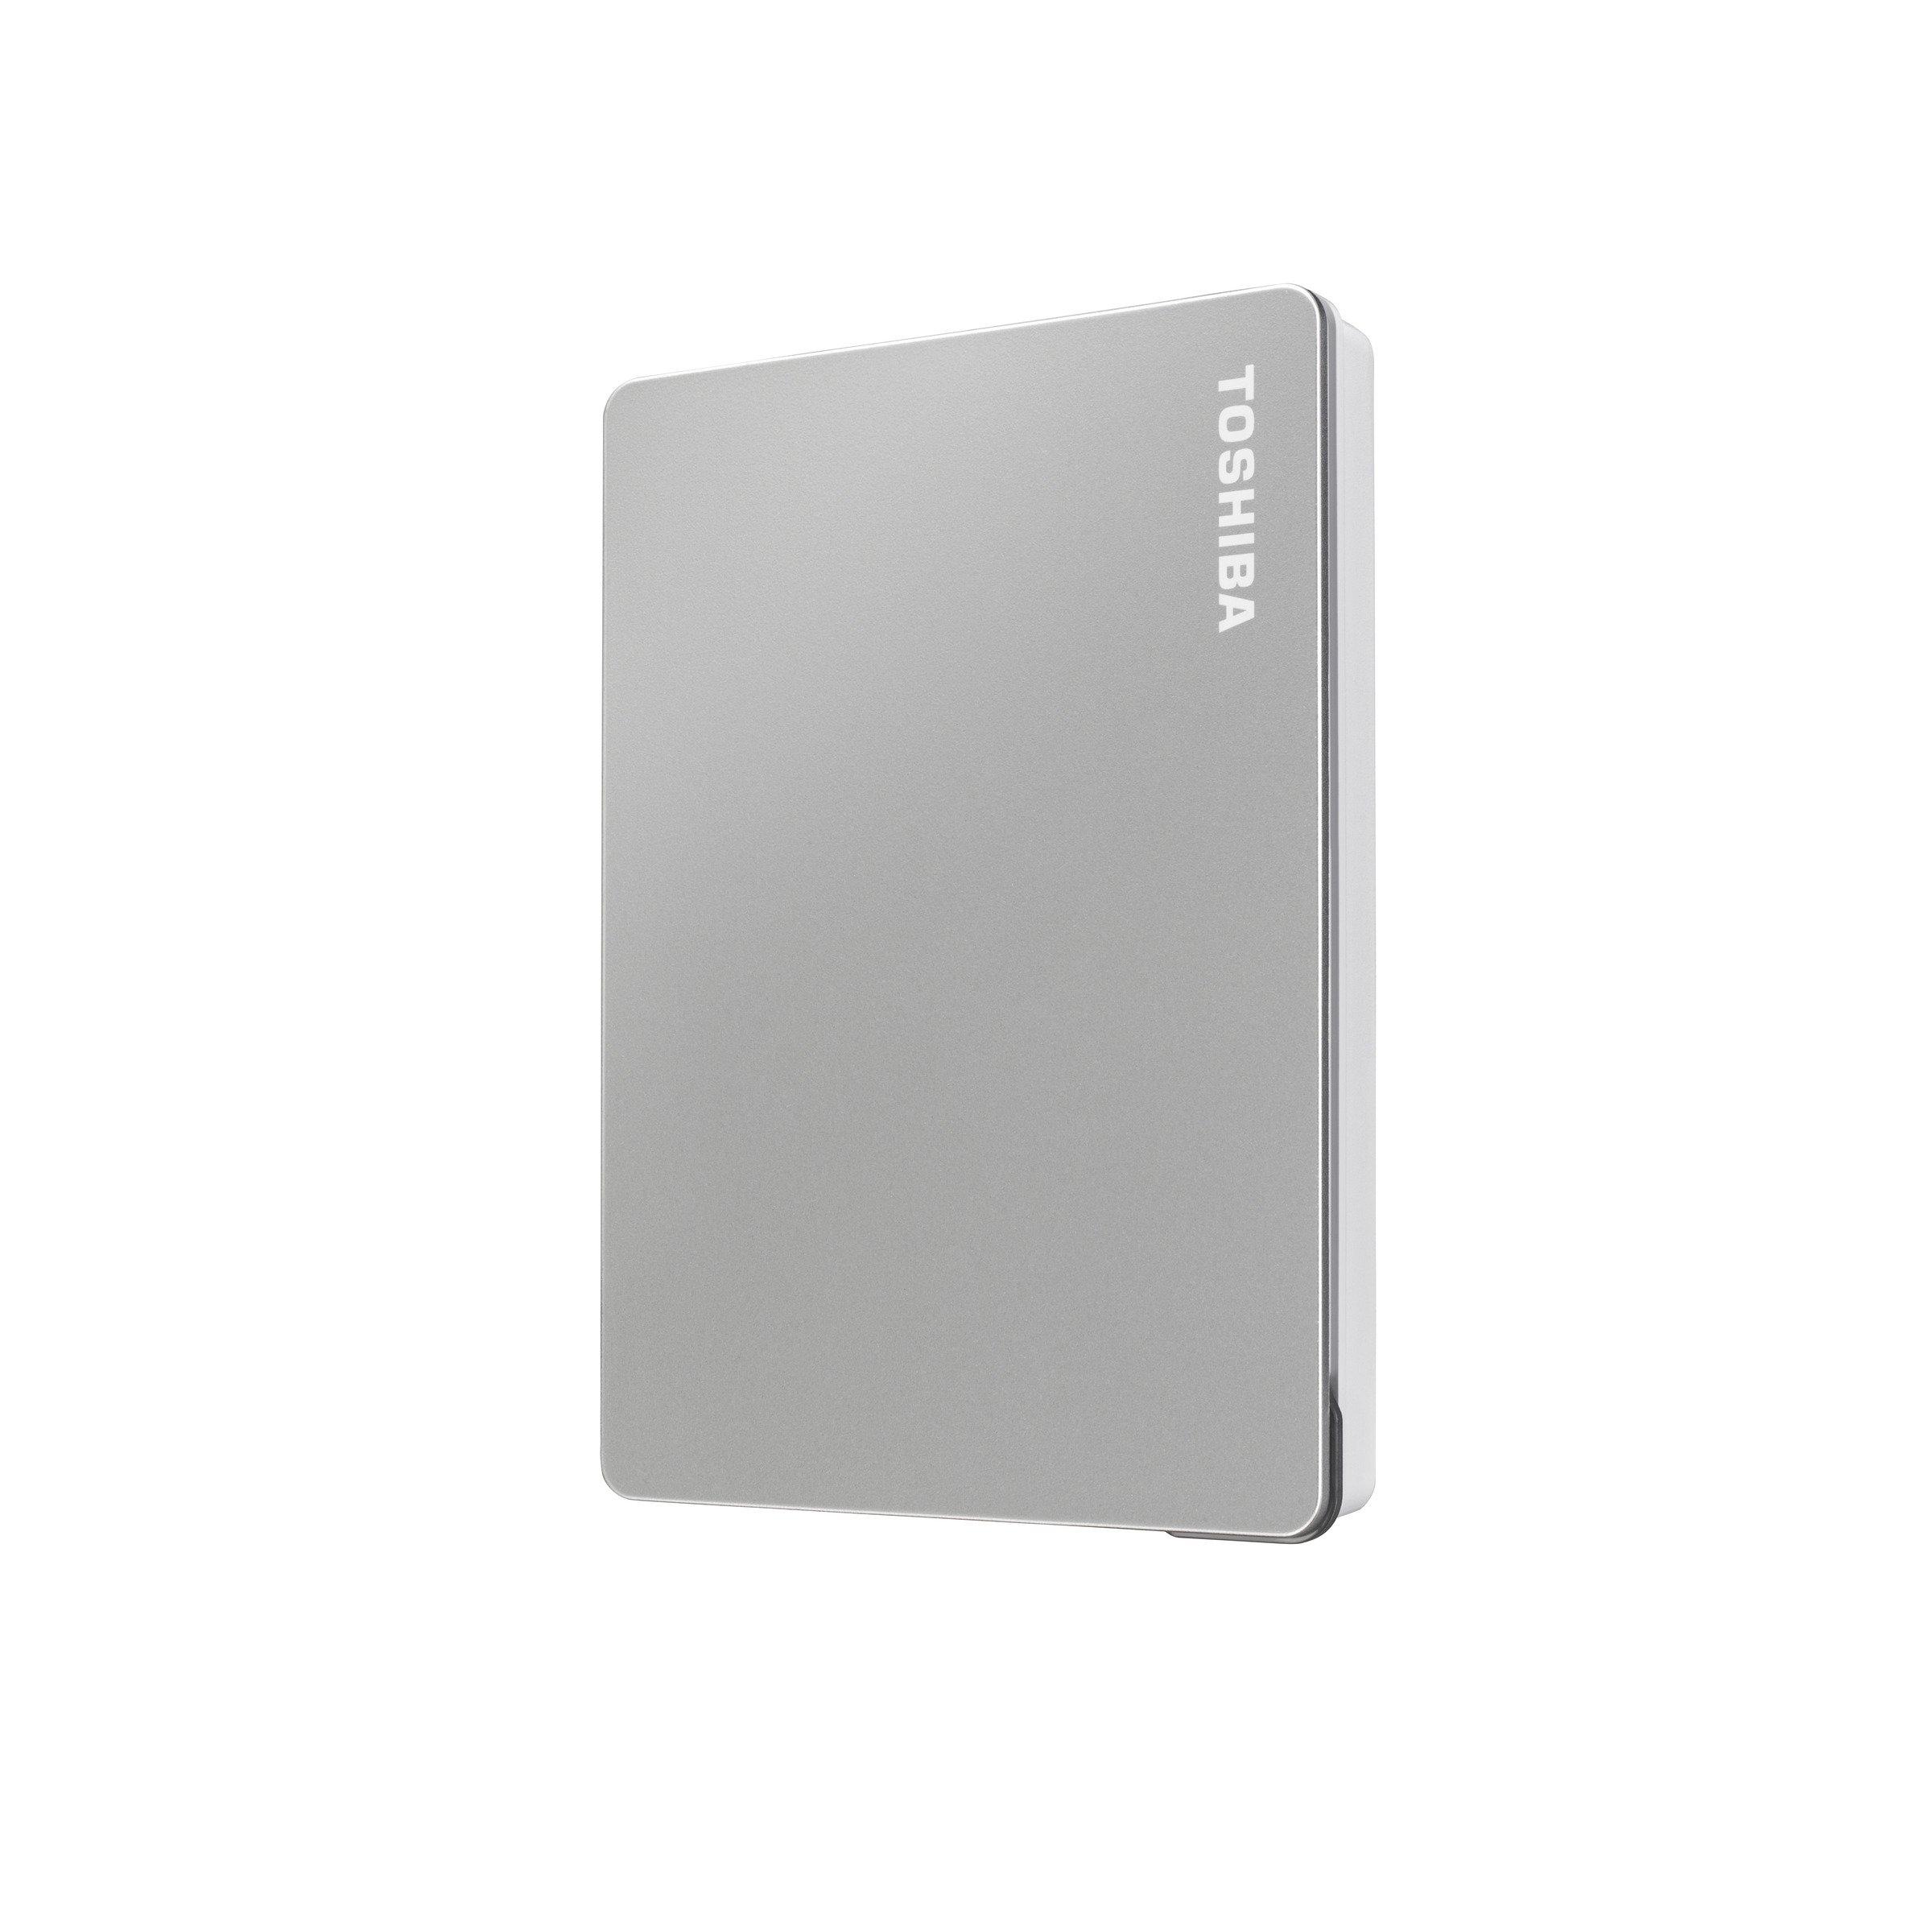 Toshiba Canvio Flex Portable External Hard Drive 1TB Silver